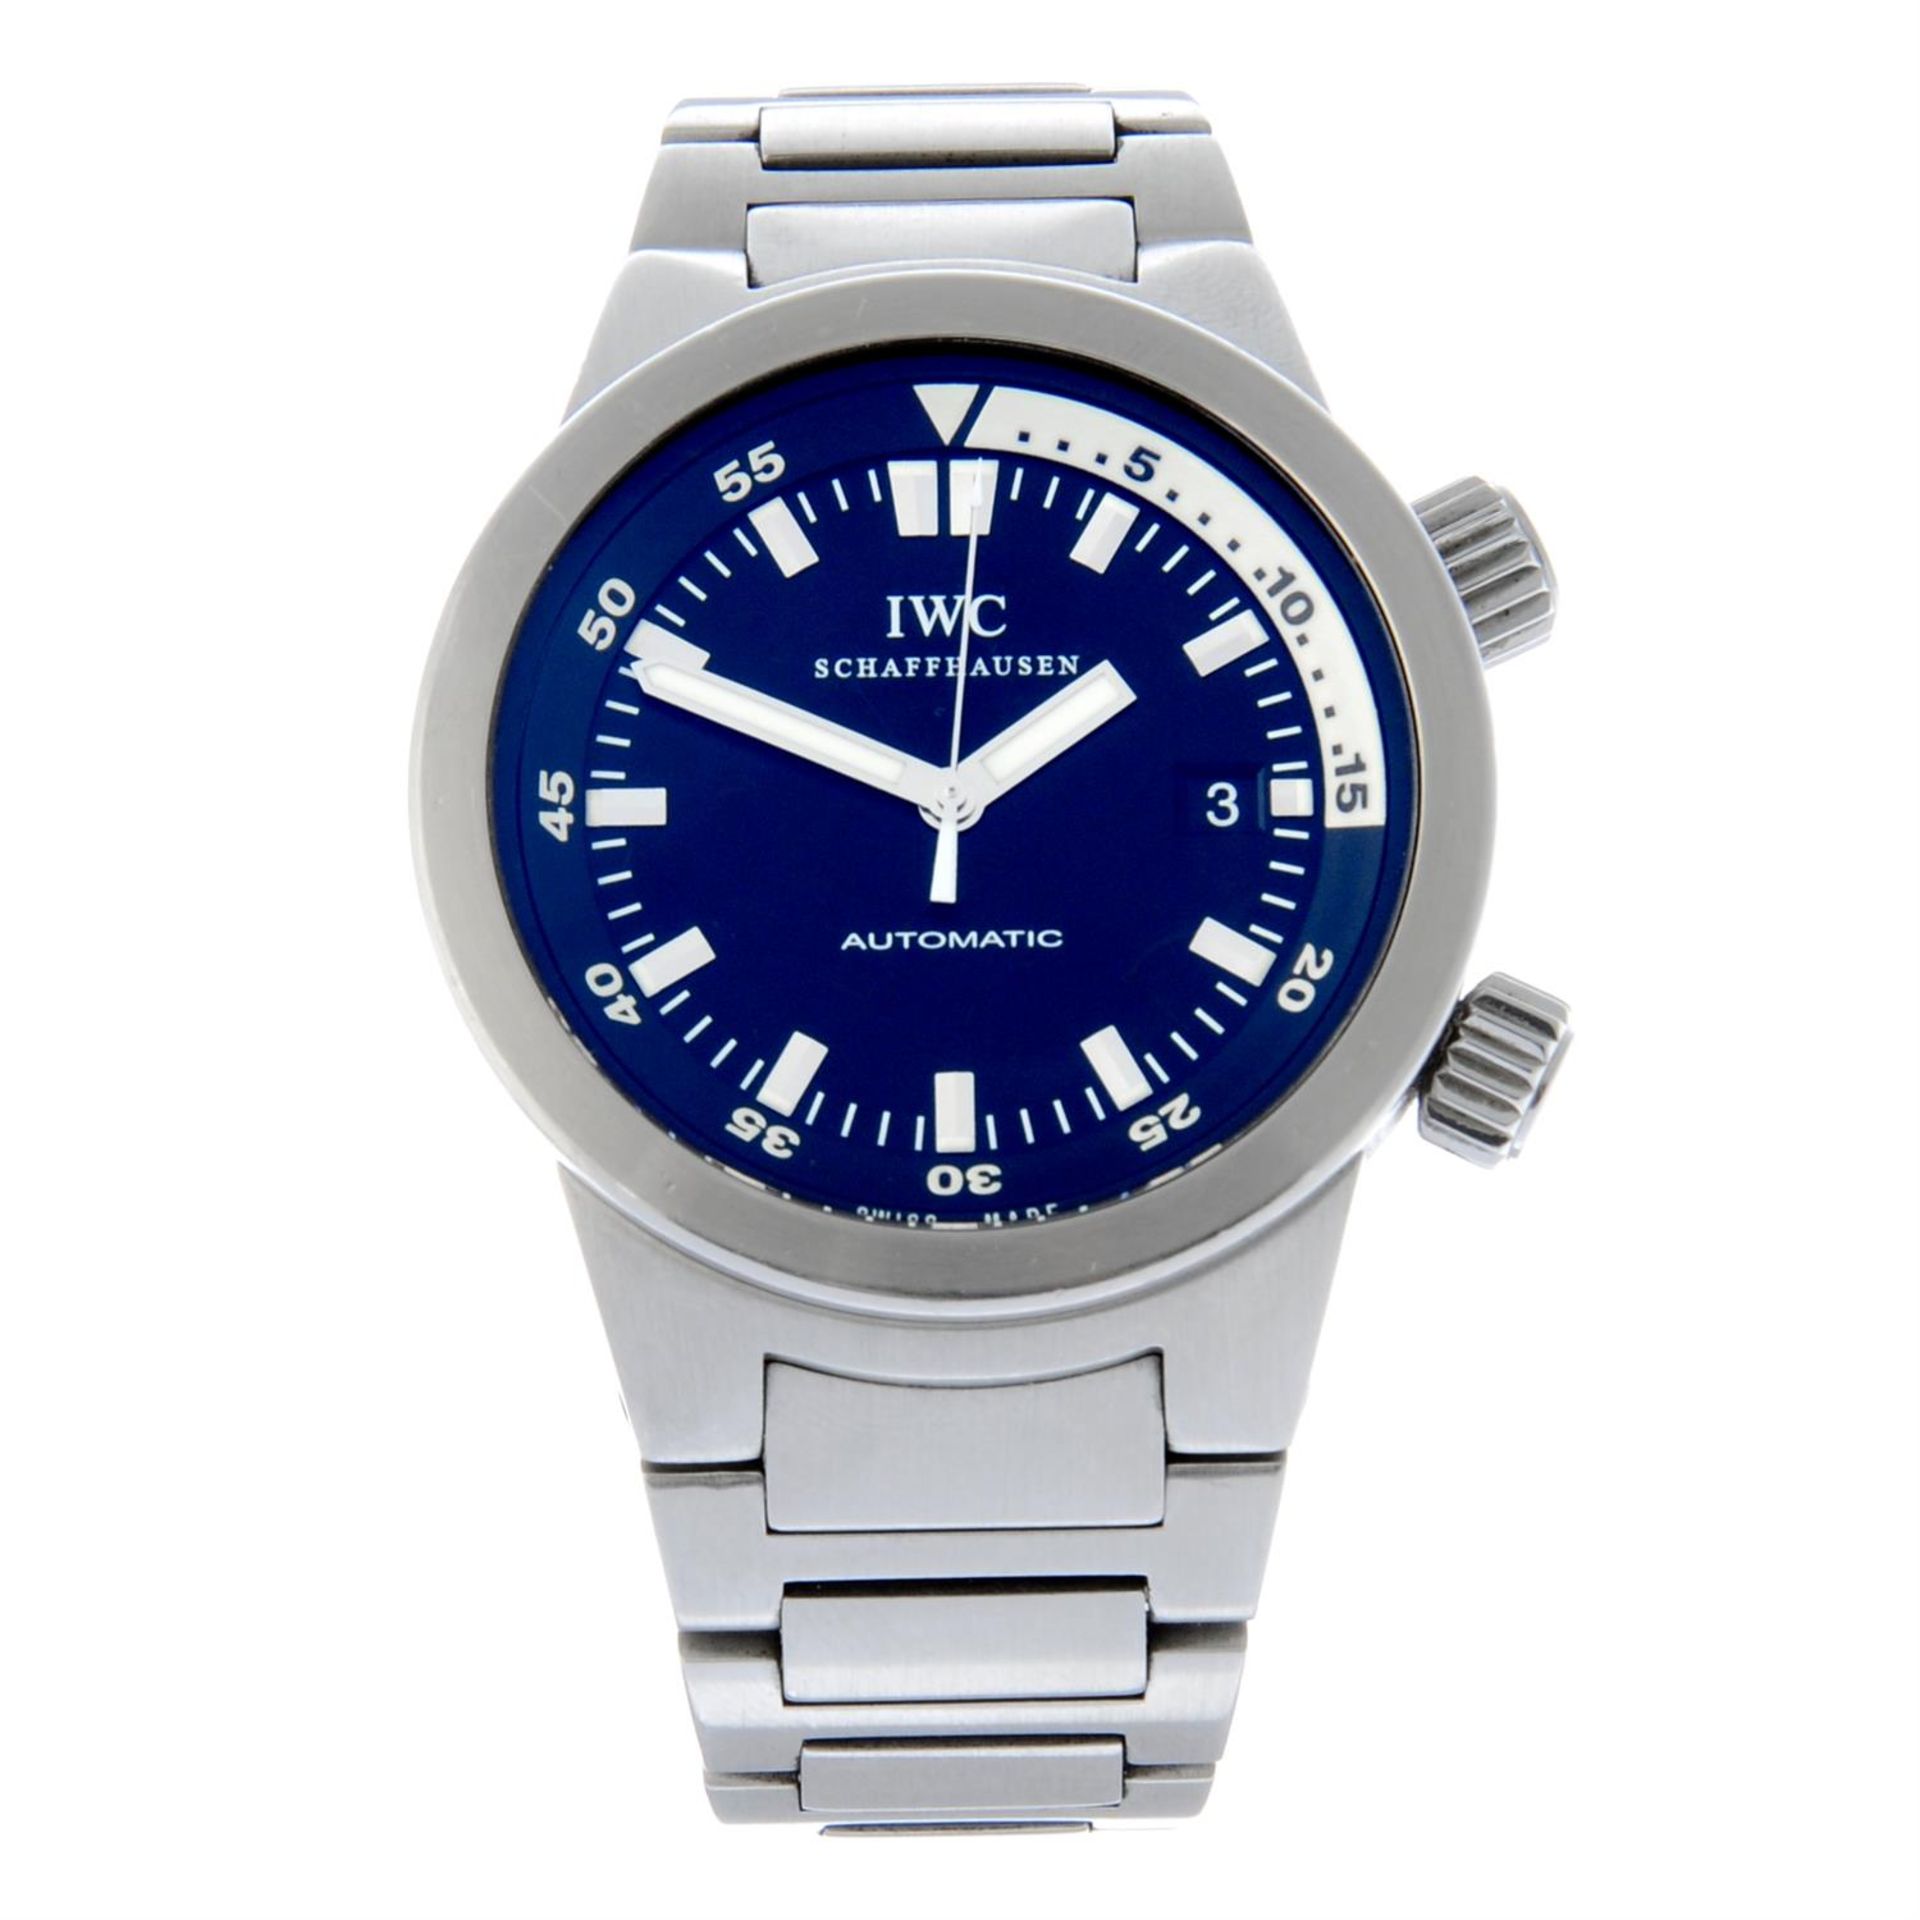 IWC - a stainless steel Aquatimer bracelet watch, 42mm.